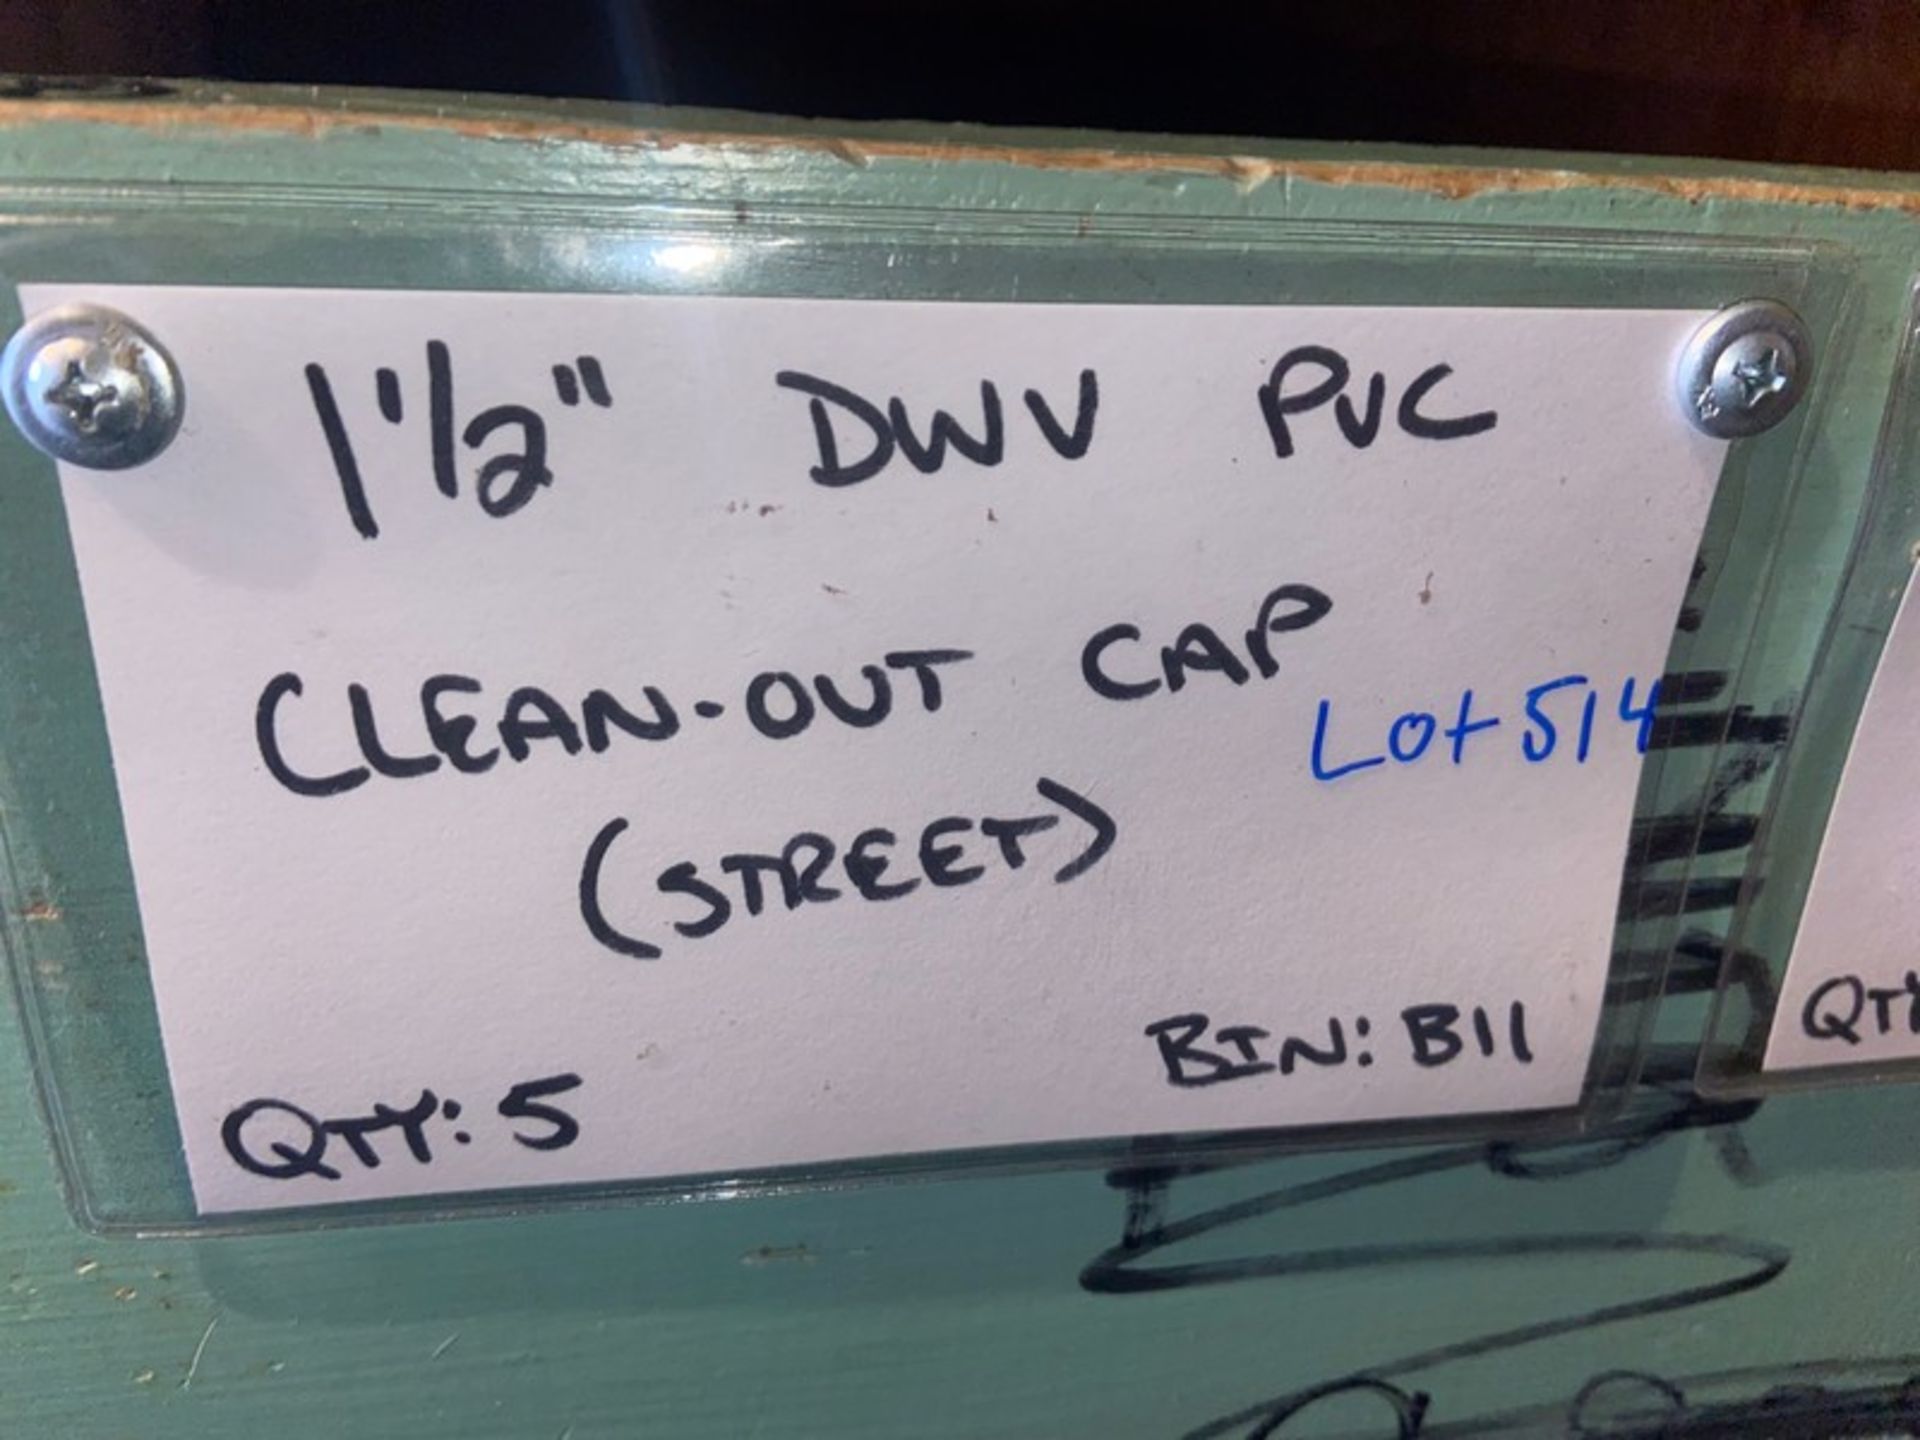 (5) 1 1/2” DWV PVC Clean-out CAP (STREET) (Bin: B11), Includes (23) 1 1/2” DWV PVC Clean-out CAP ( - Image 3 of 9